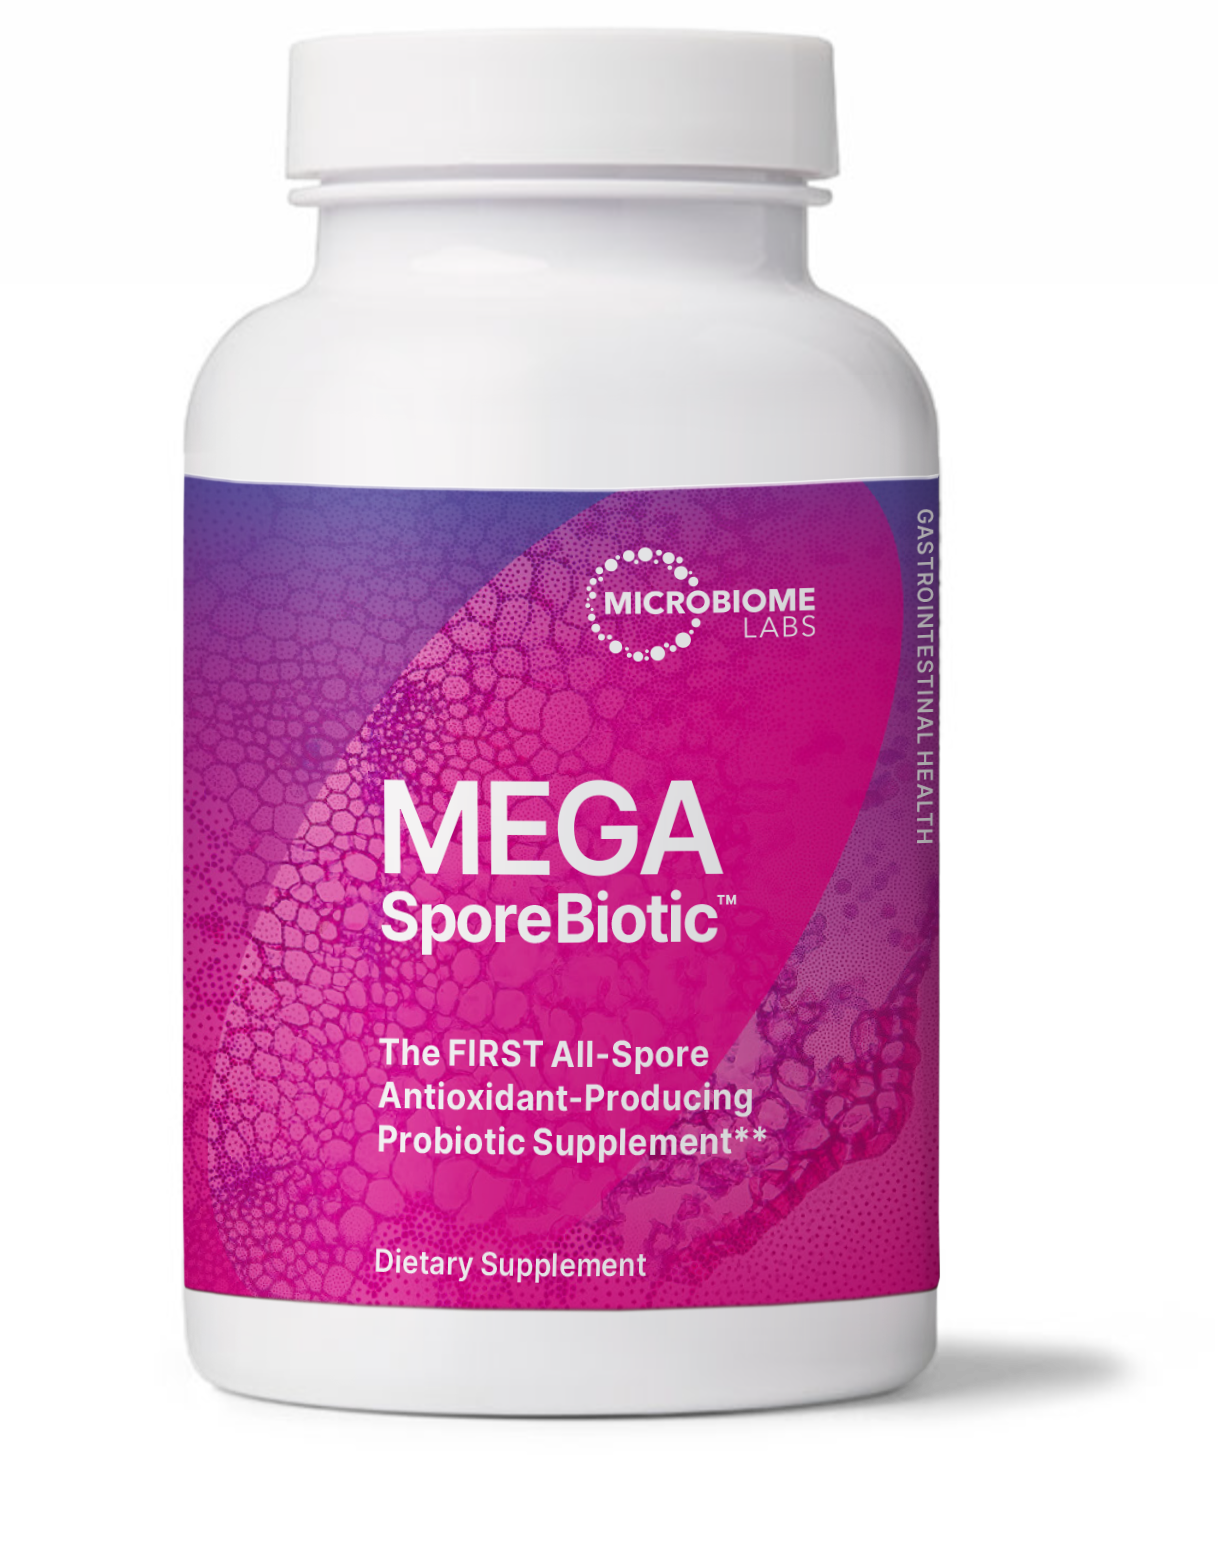 MegaSporeBiotic by Microbiome Labs spore based blend of 5 Bacillus spores